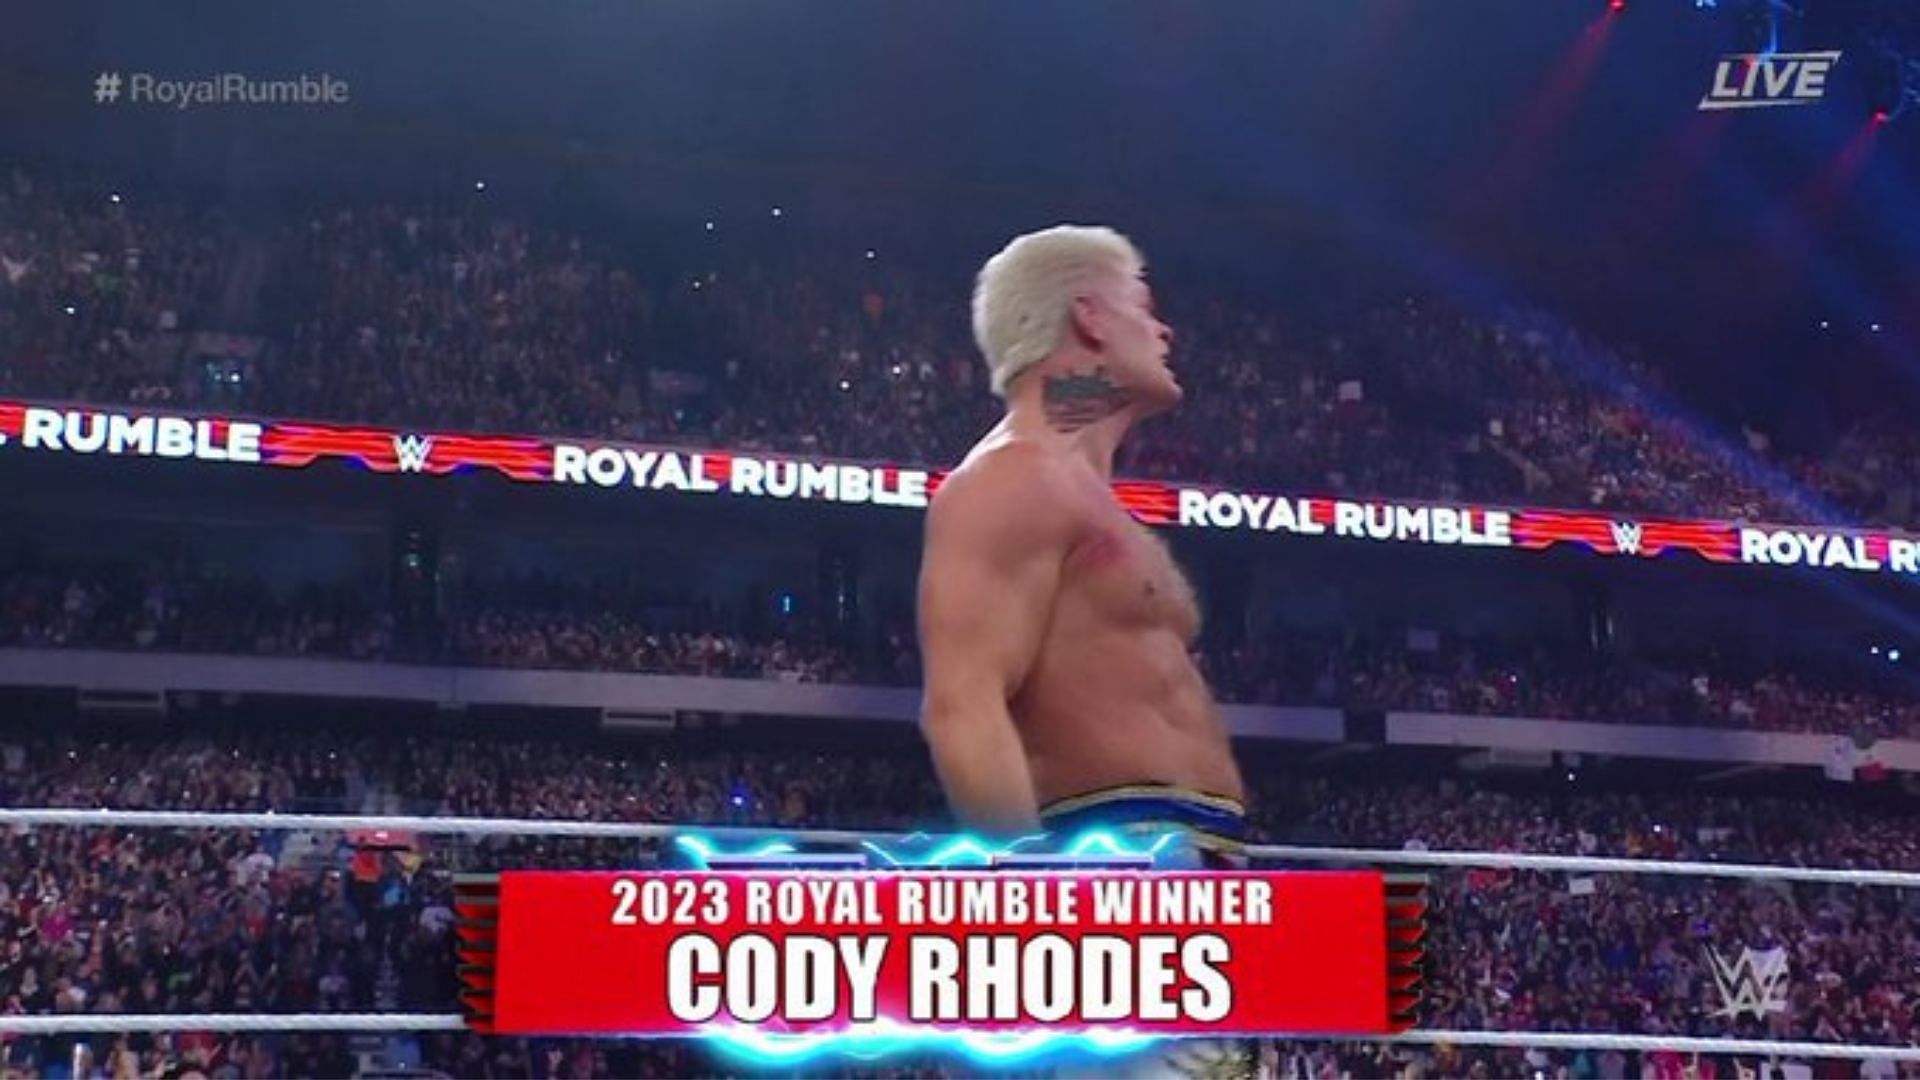 Cody Rhodes has won the Men